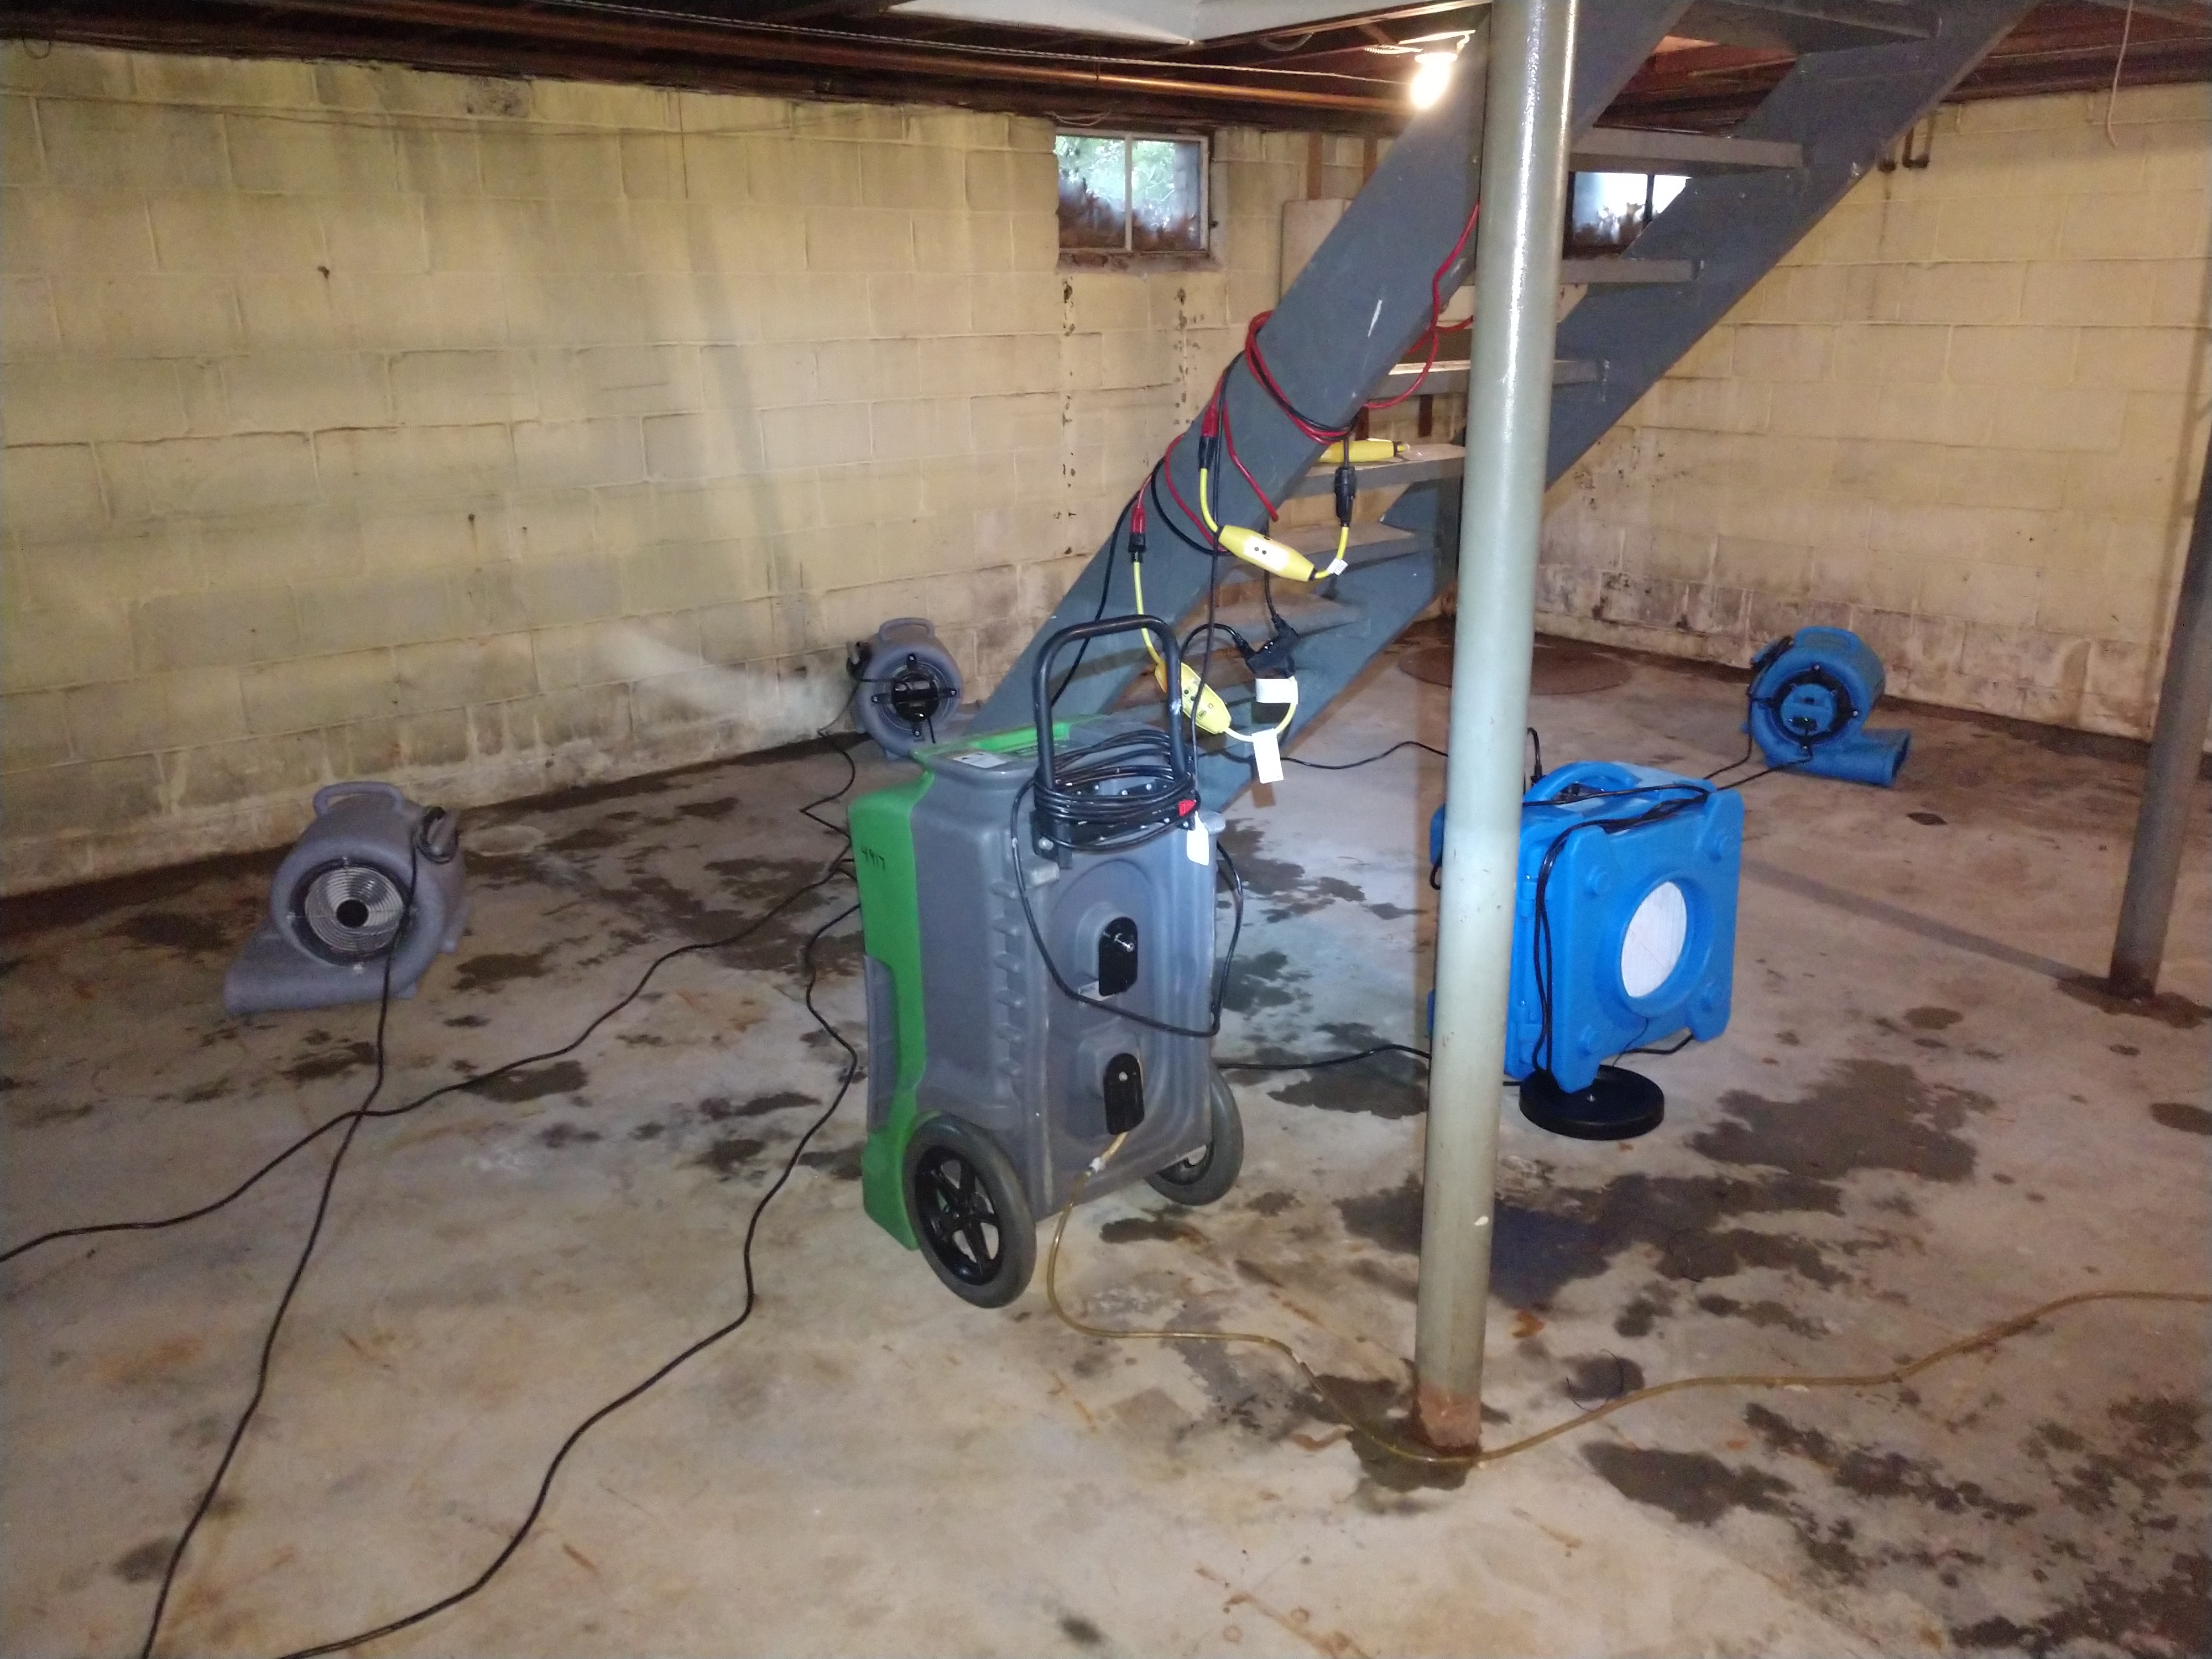 professional water damage restoration equipment